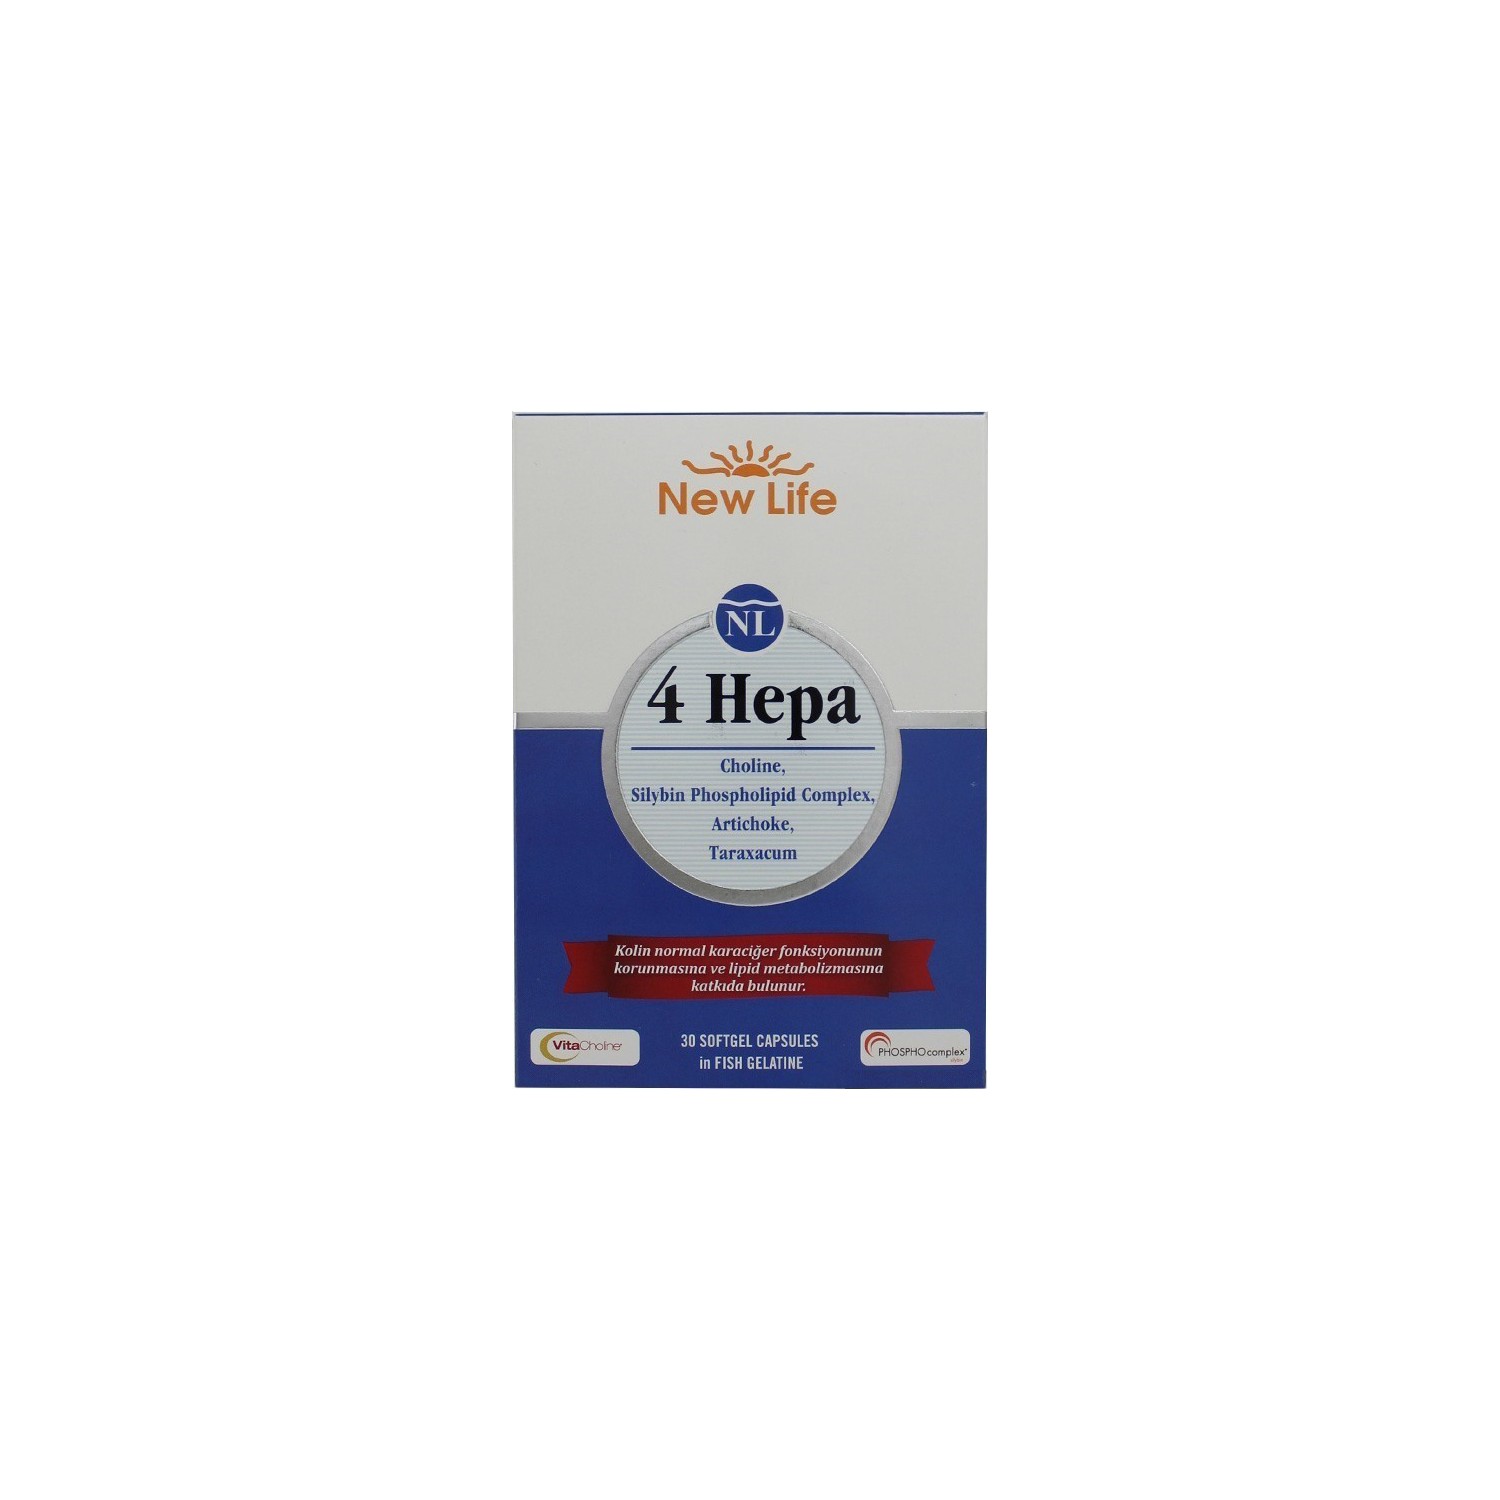 Неру лайф. New Life 4 HEPA. New Life 4 HEPA инструкция. Турция HEPA 4. Витамины 4hepa.